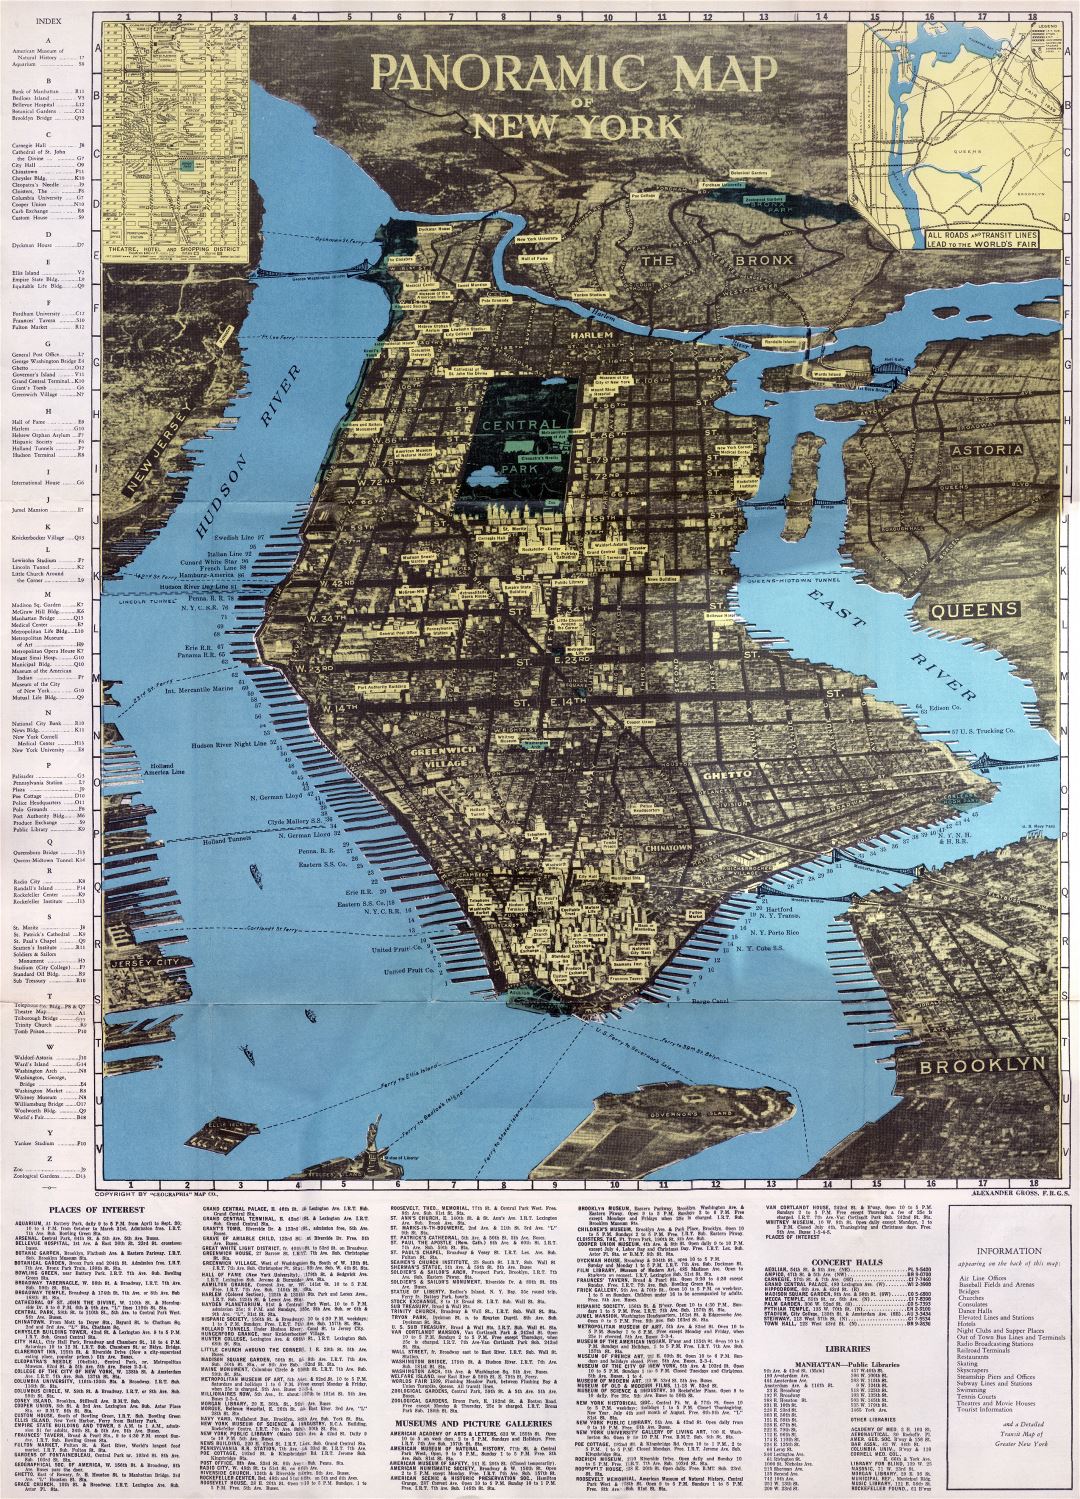 Large scale panoramic map of Manhattam, New York city